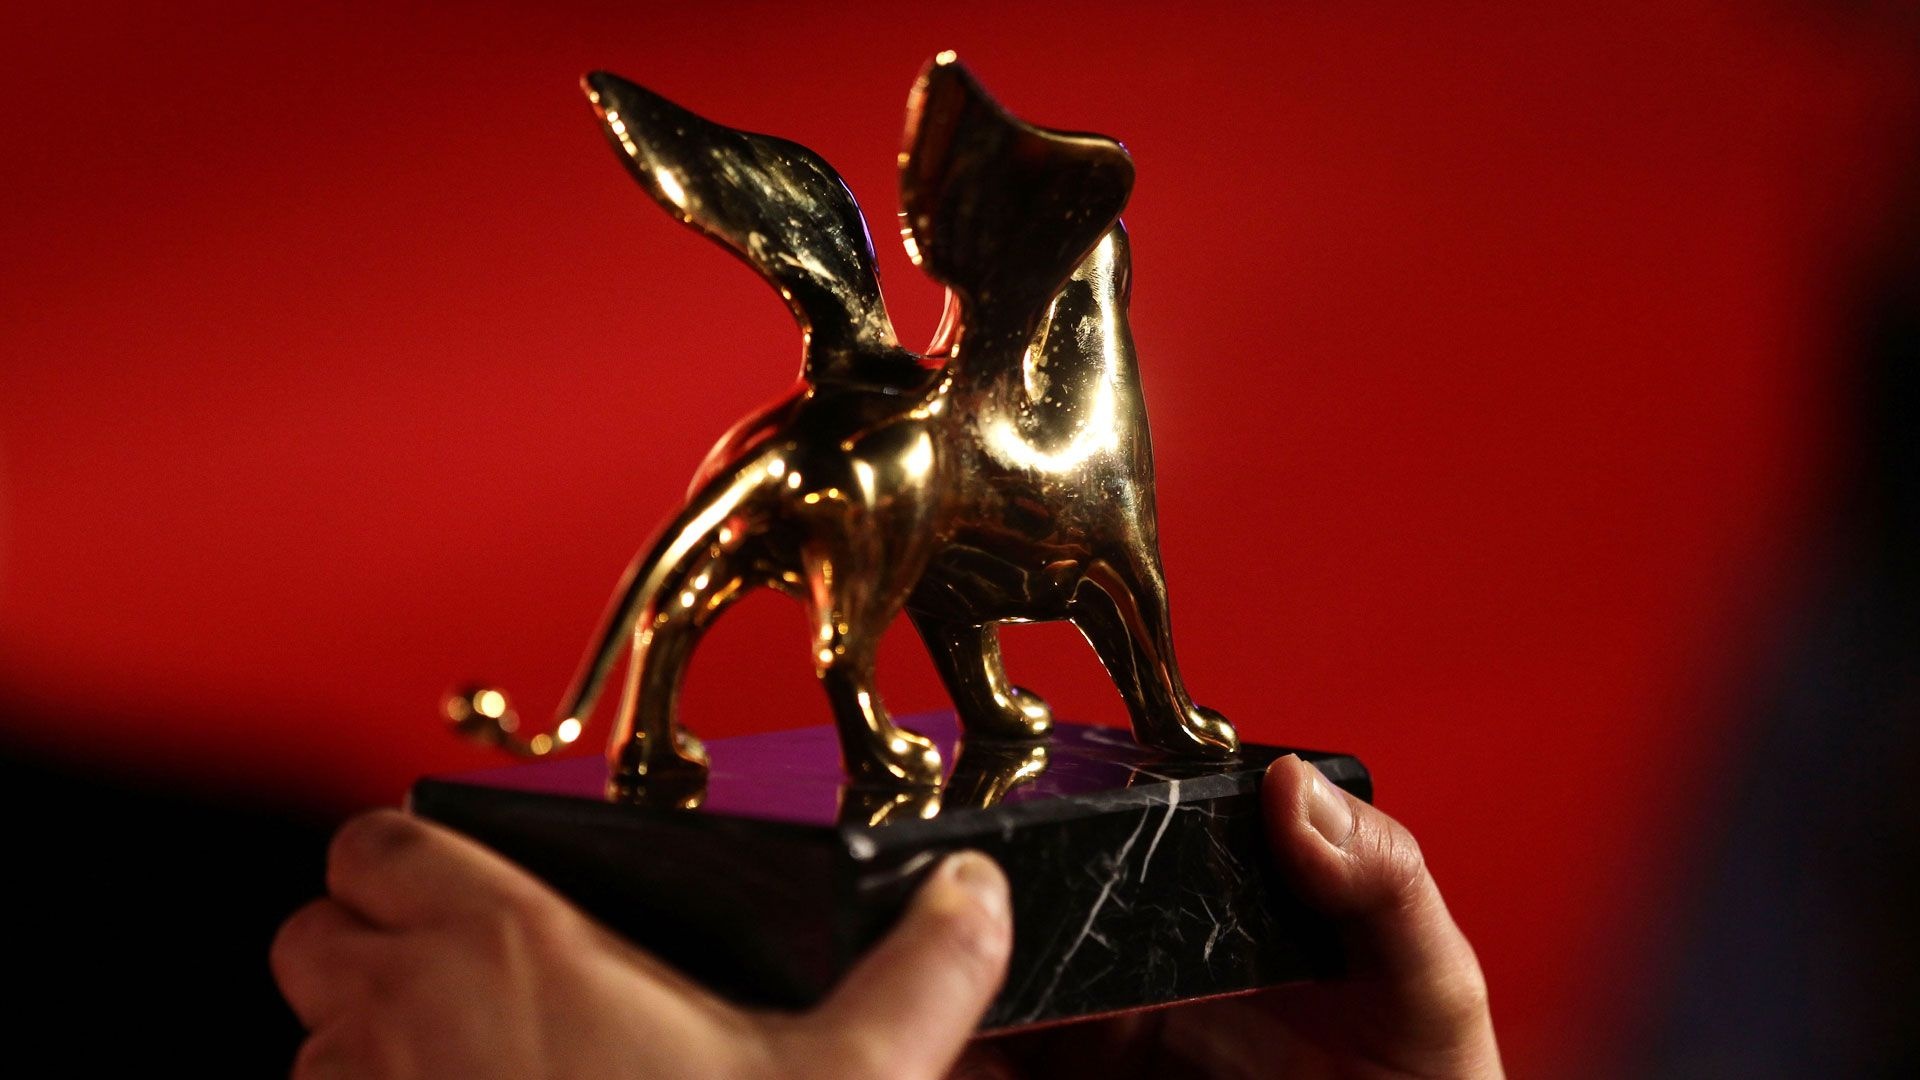 Hideo Kojima, Film festival jury, Golden Lion Award, Industry recognition, 1920x1080 Full HD Desktop